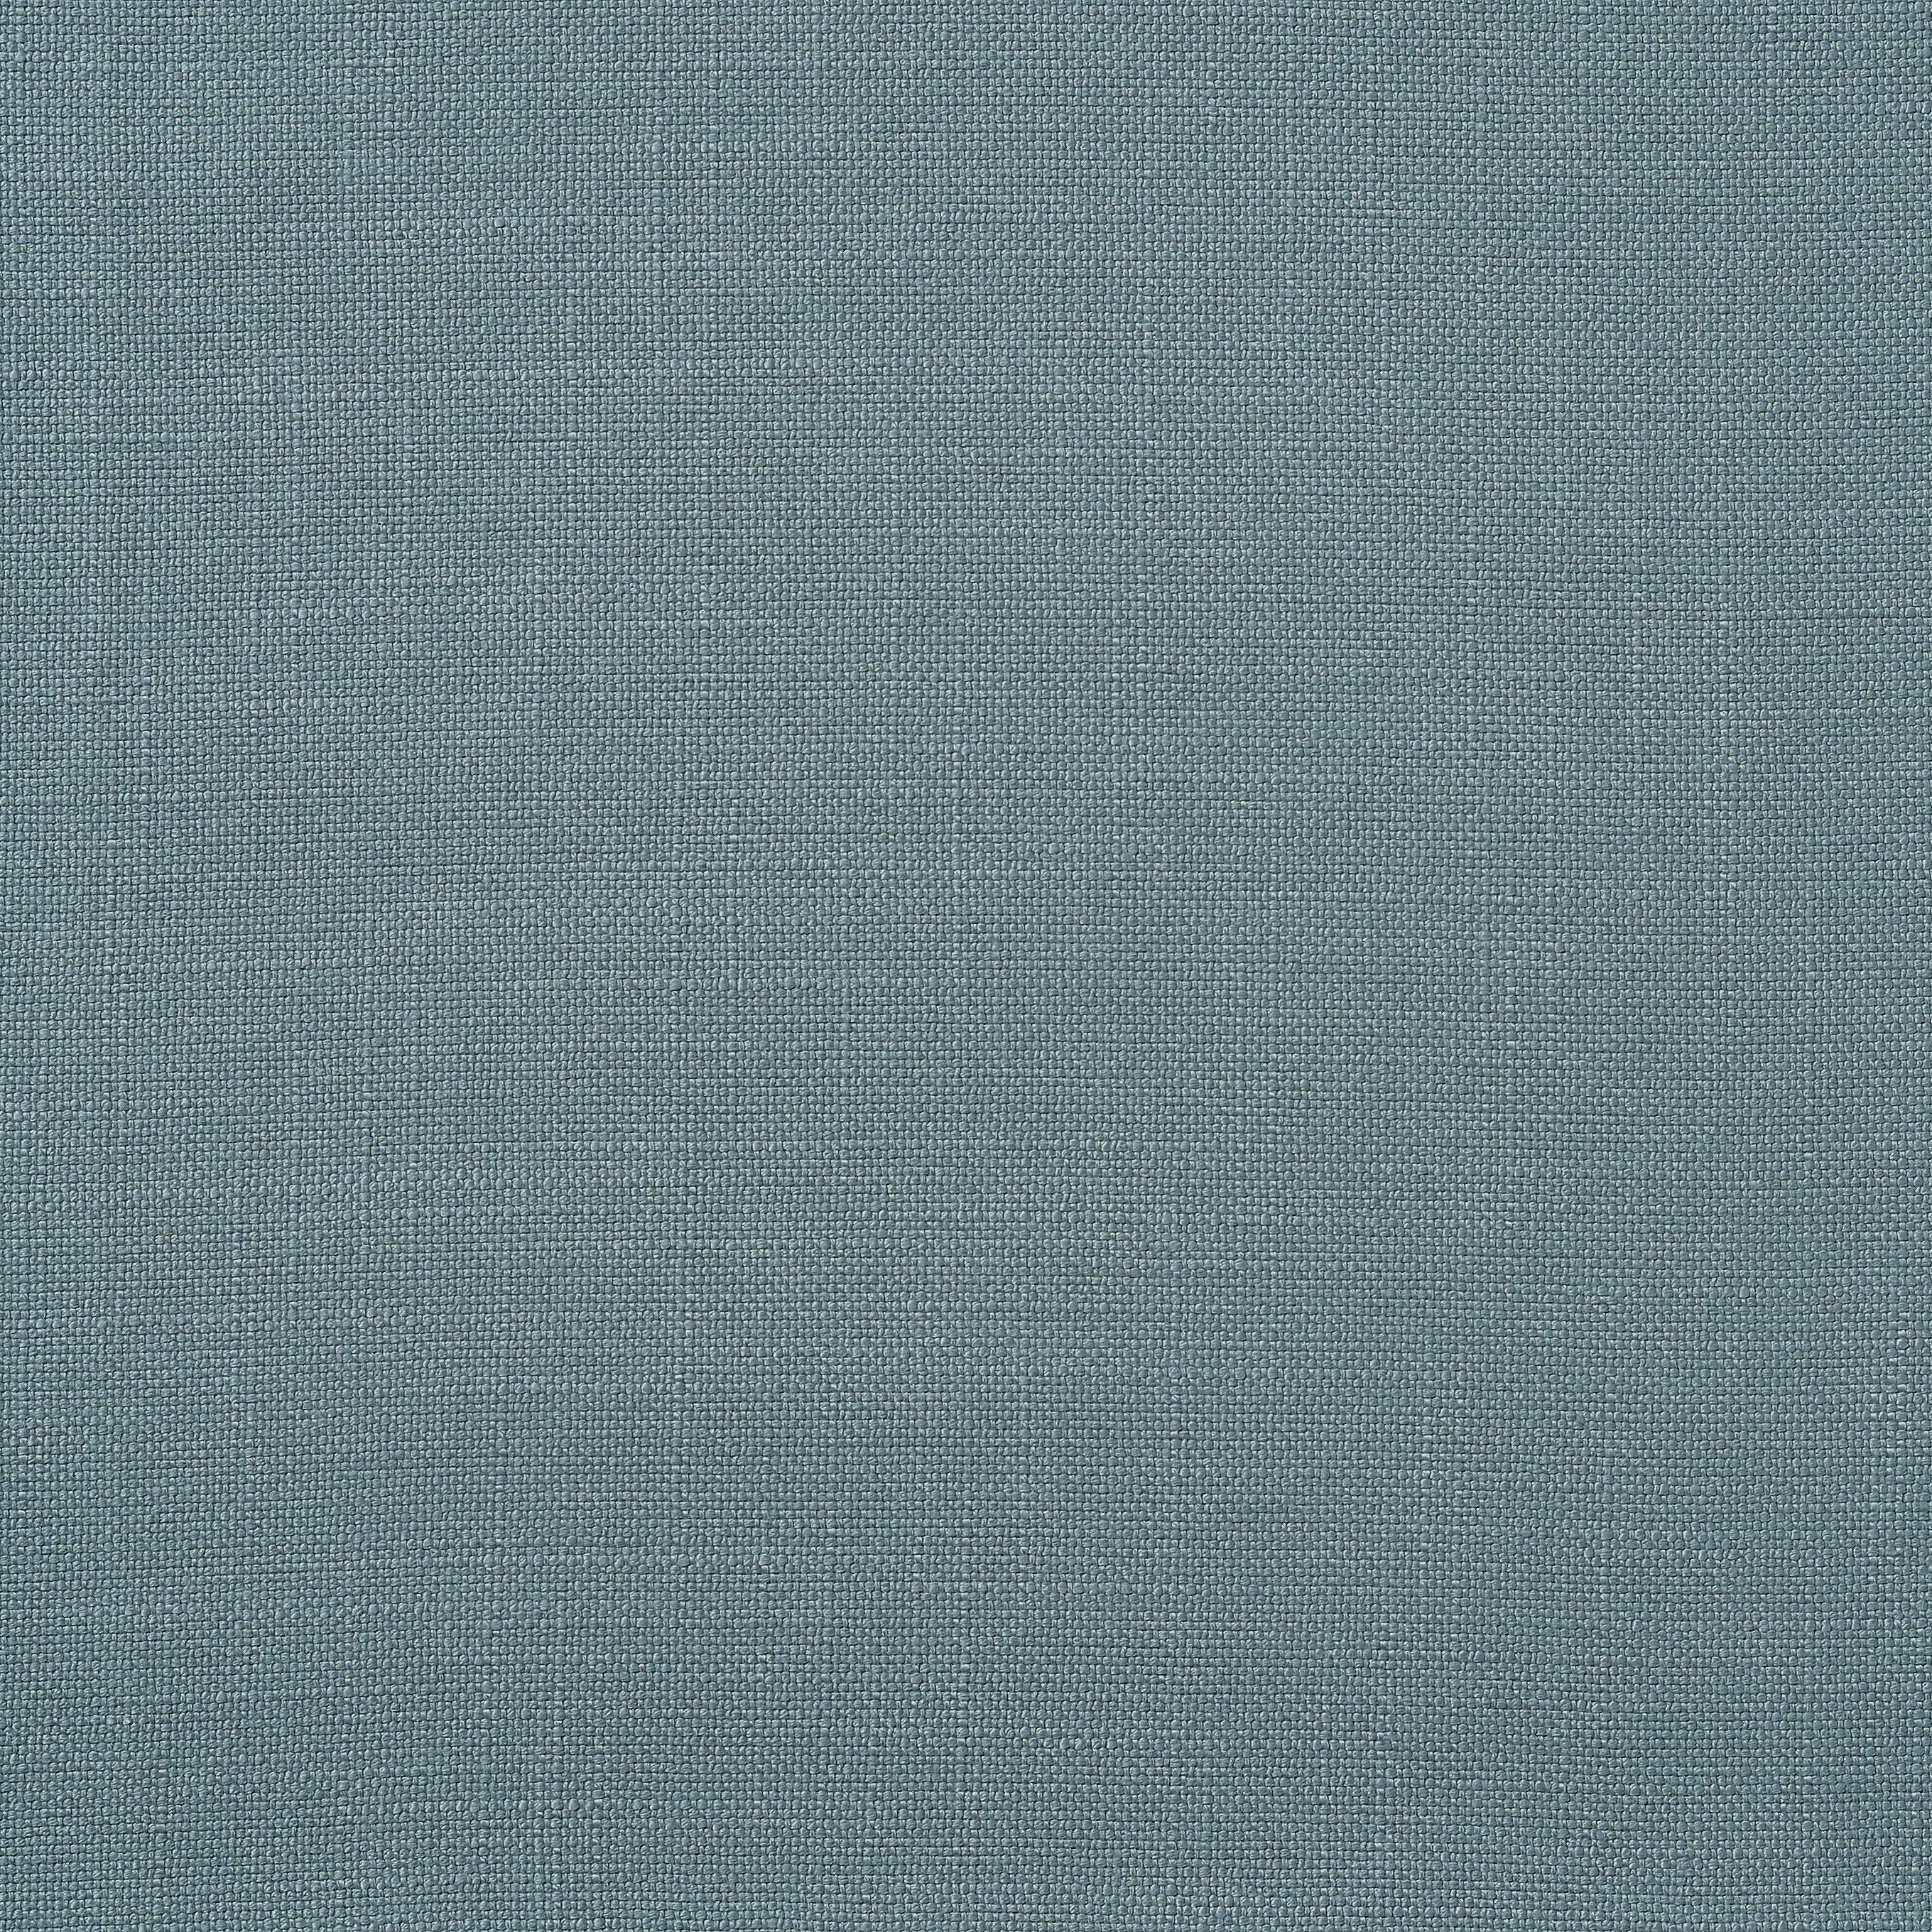 Mitford House Linen Mix - Sky Blue